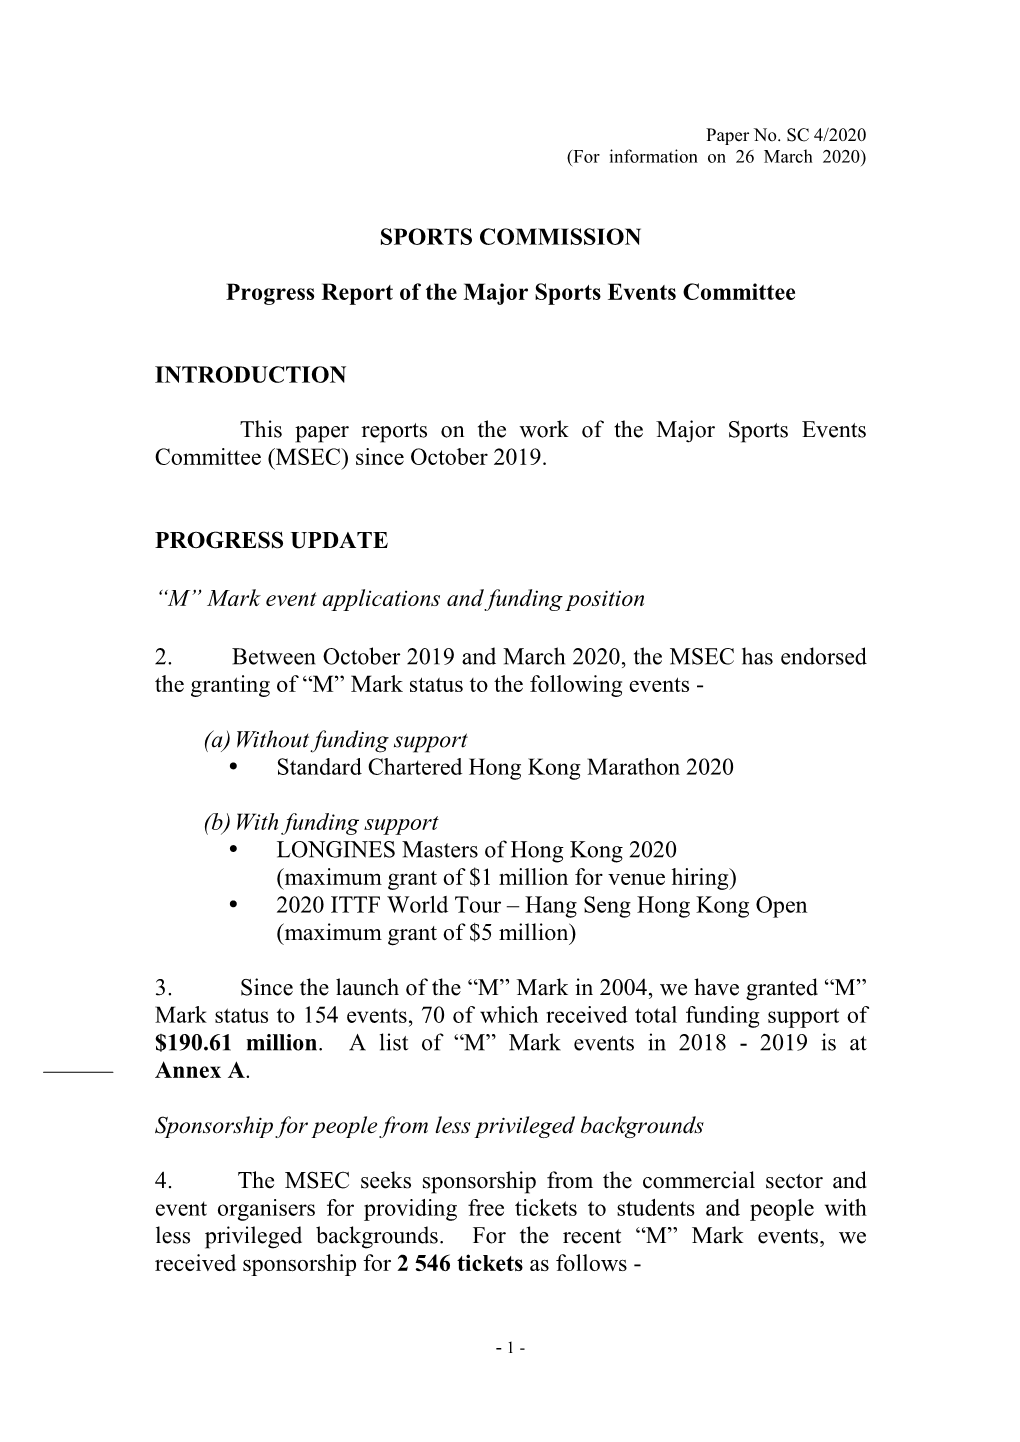 Paper SC 4/2020: Progress Report of the Major